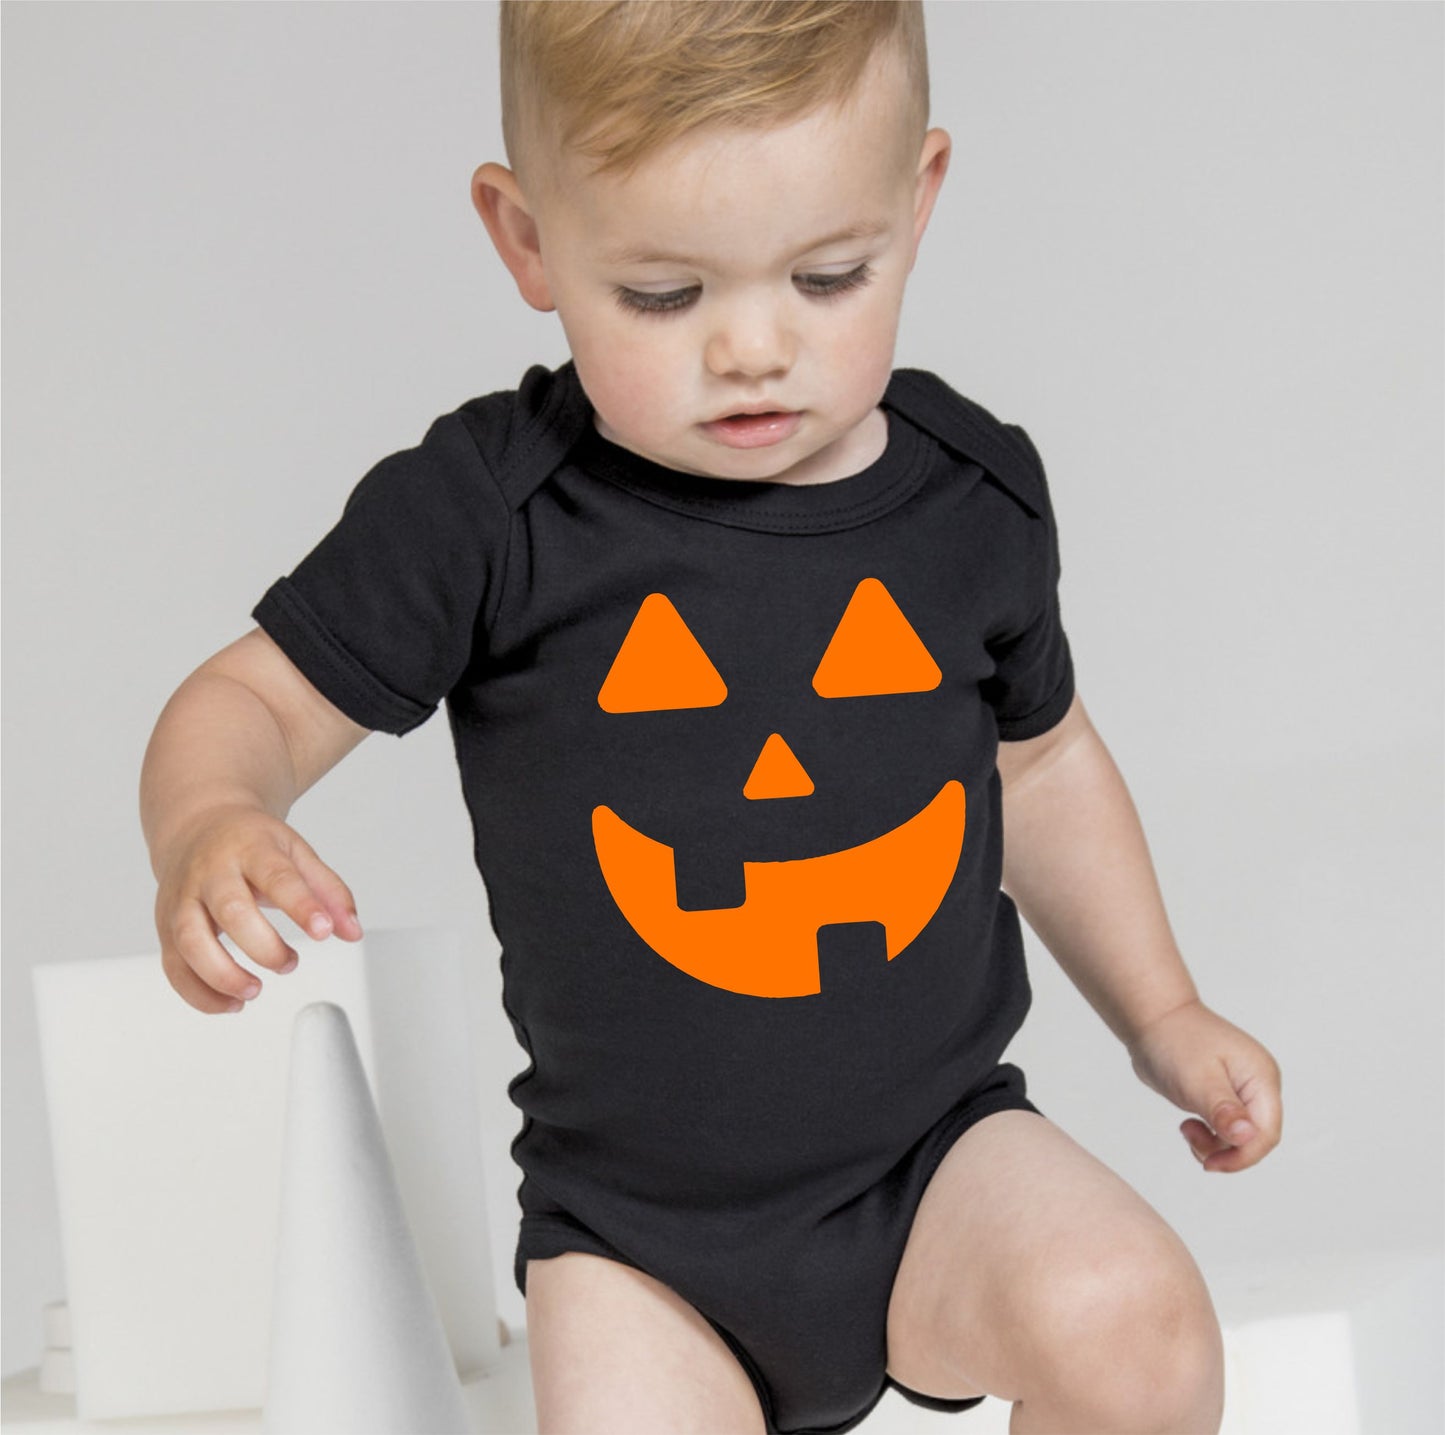 Baby Halloween  Onesies - Scary Face Pumpkin